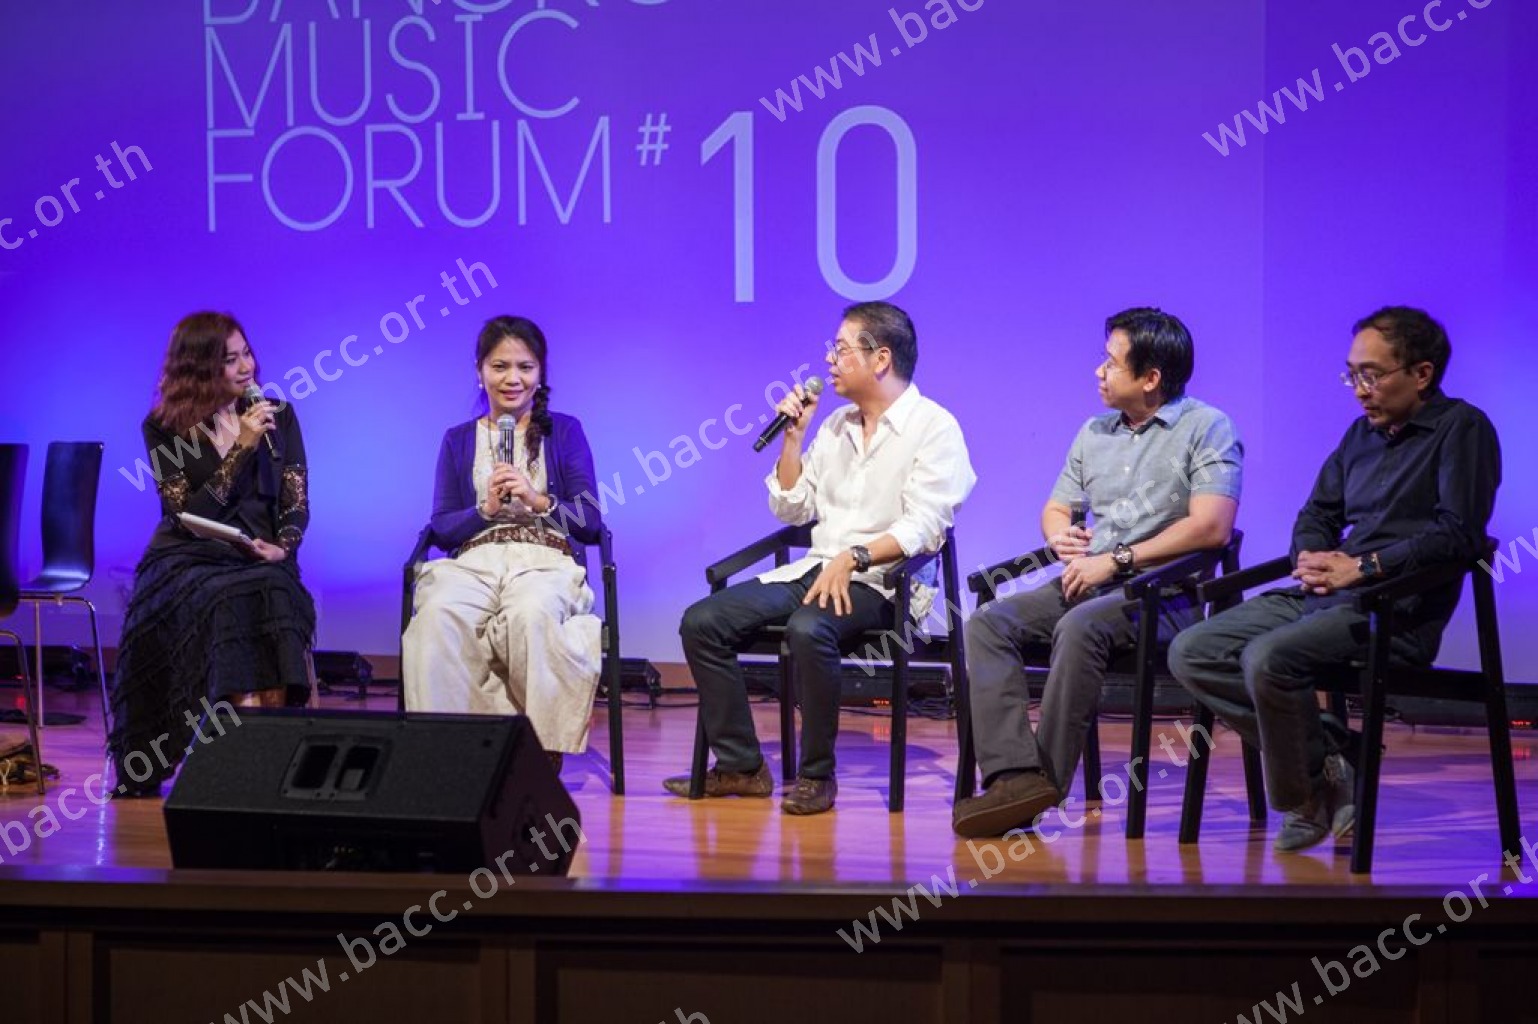 The 10th Bangkok Music Forum : “The Musical Theatre”